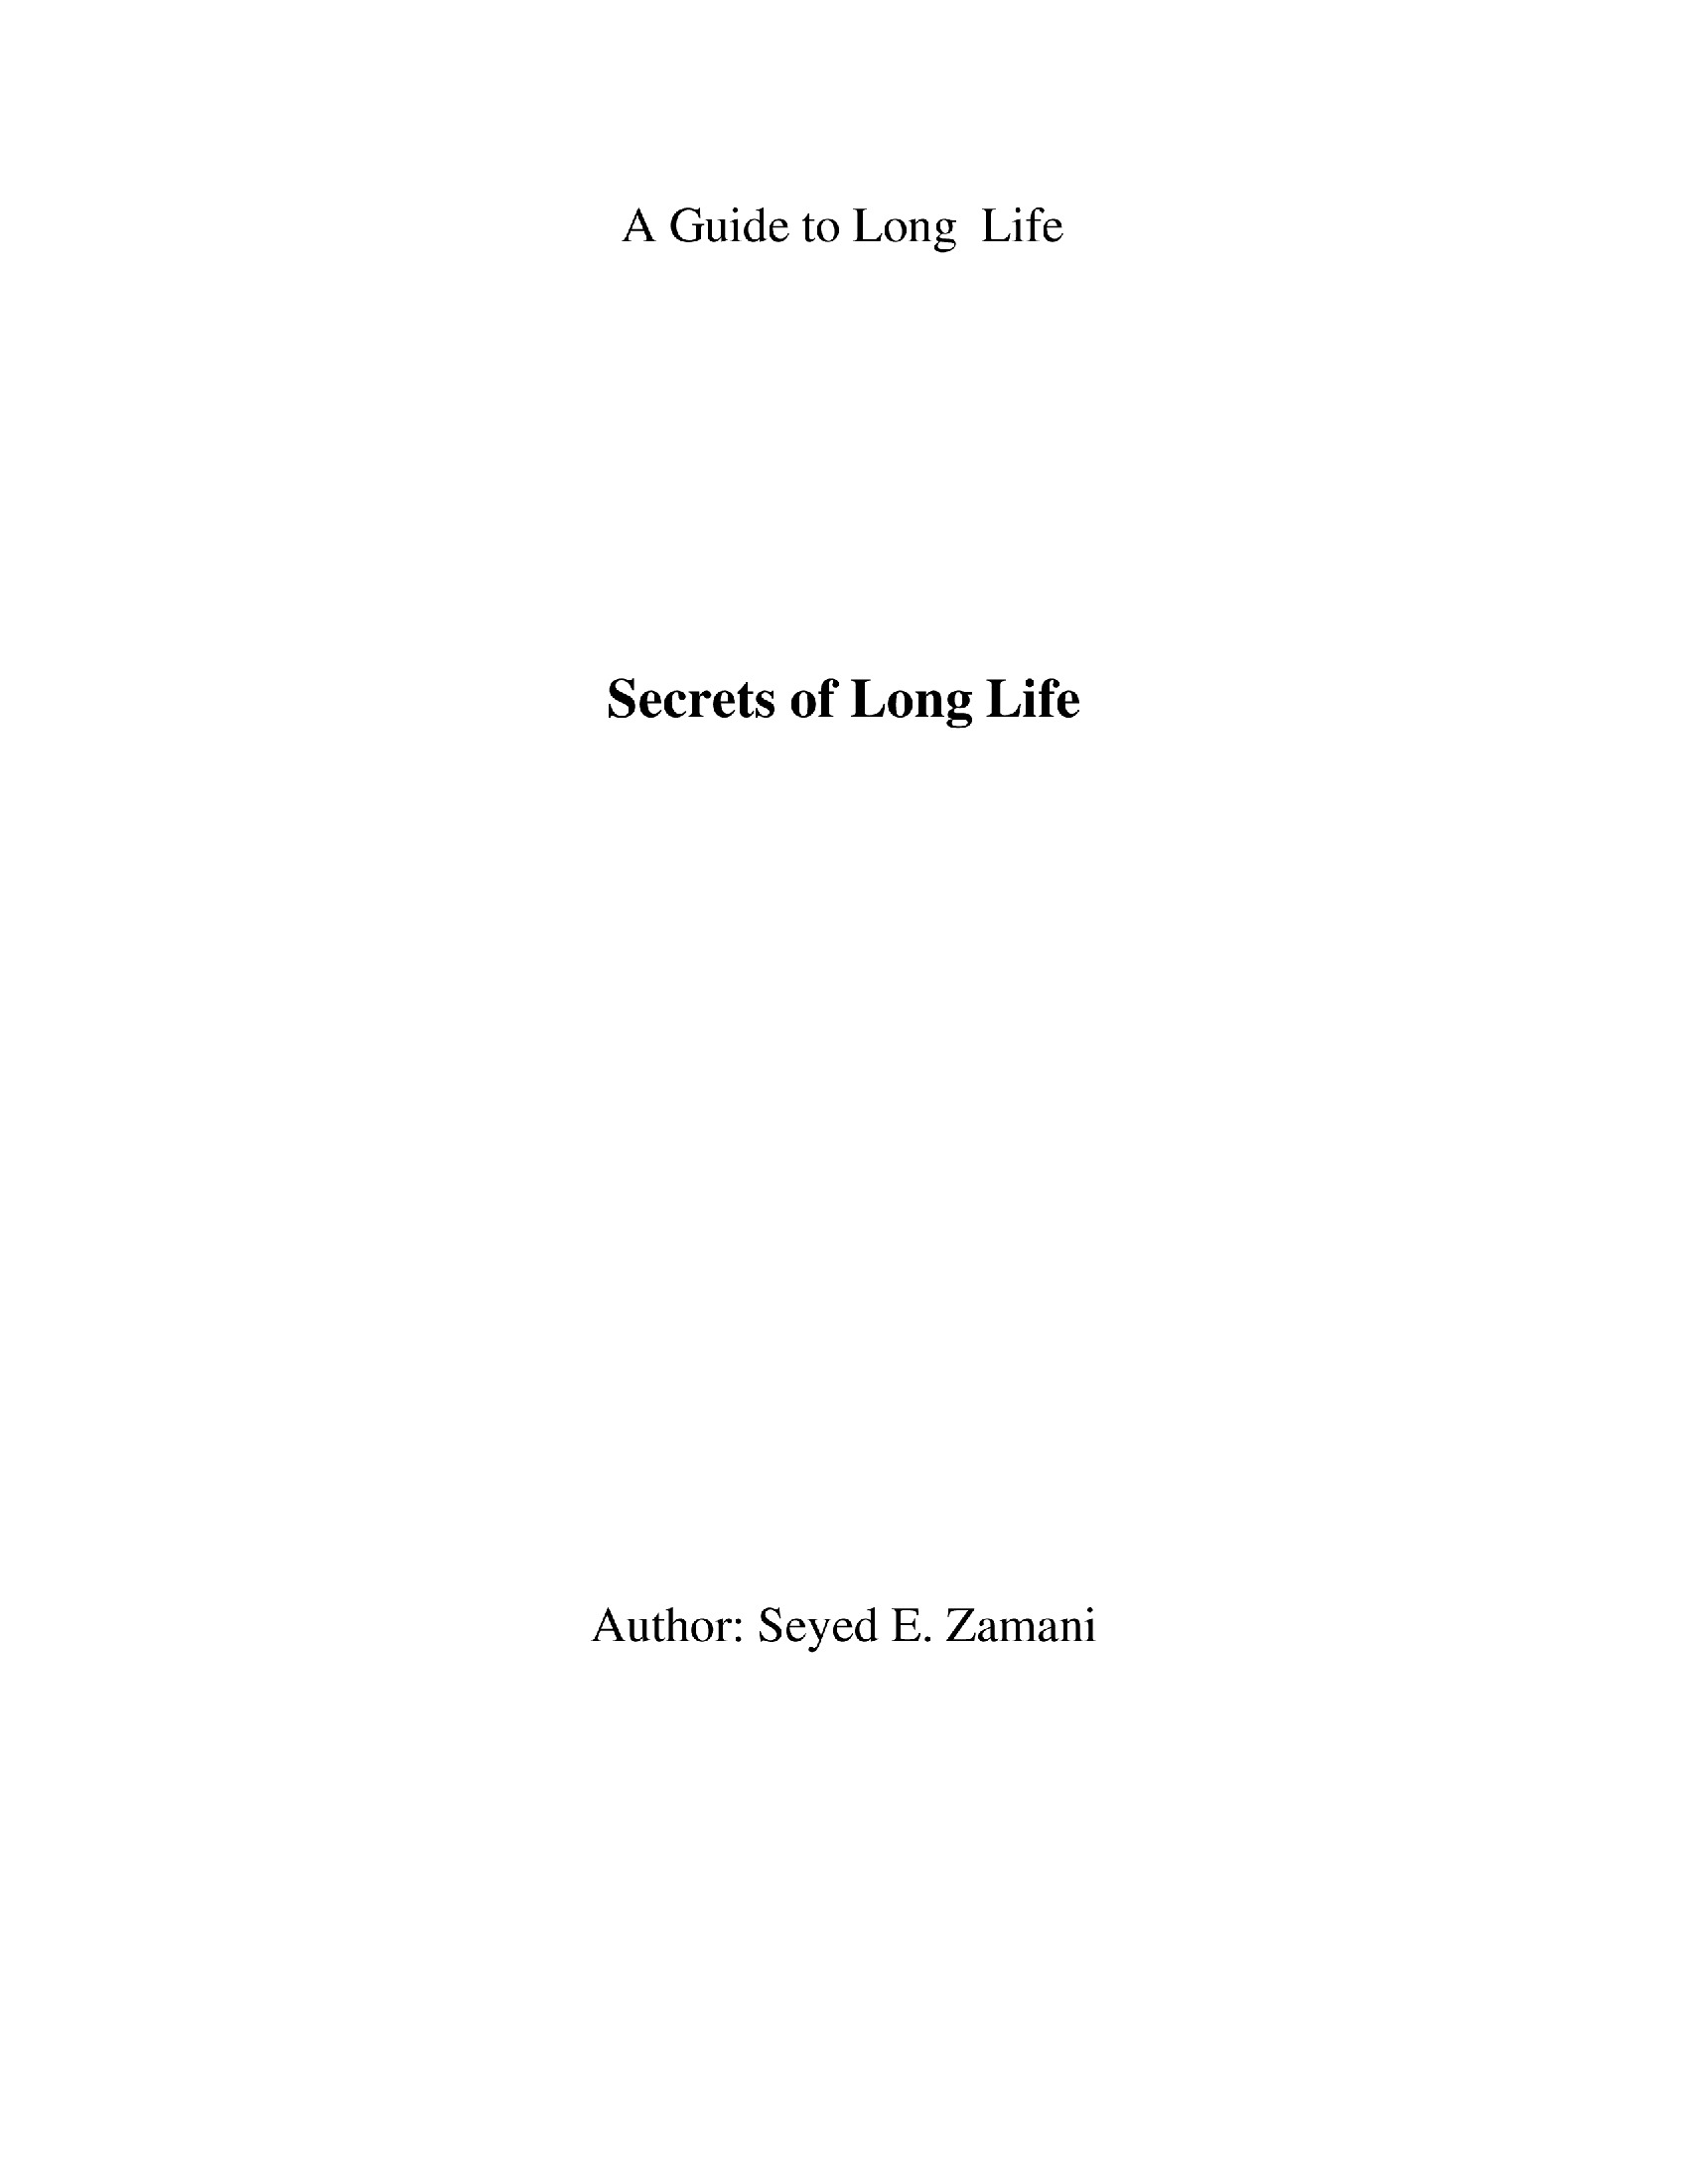 the secret of long life essay